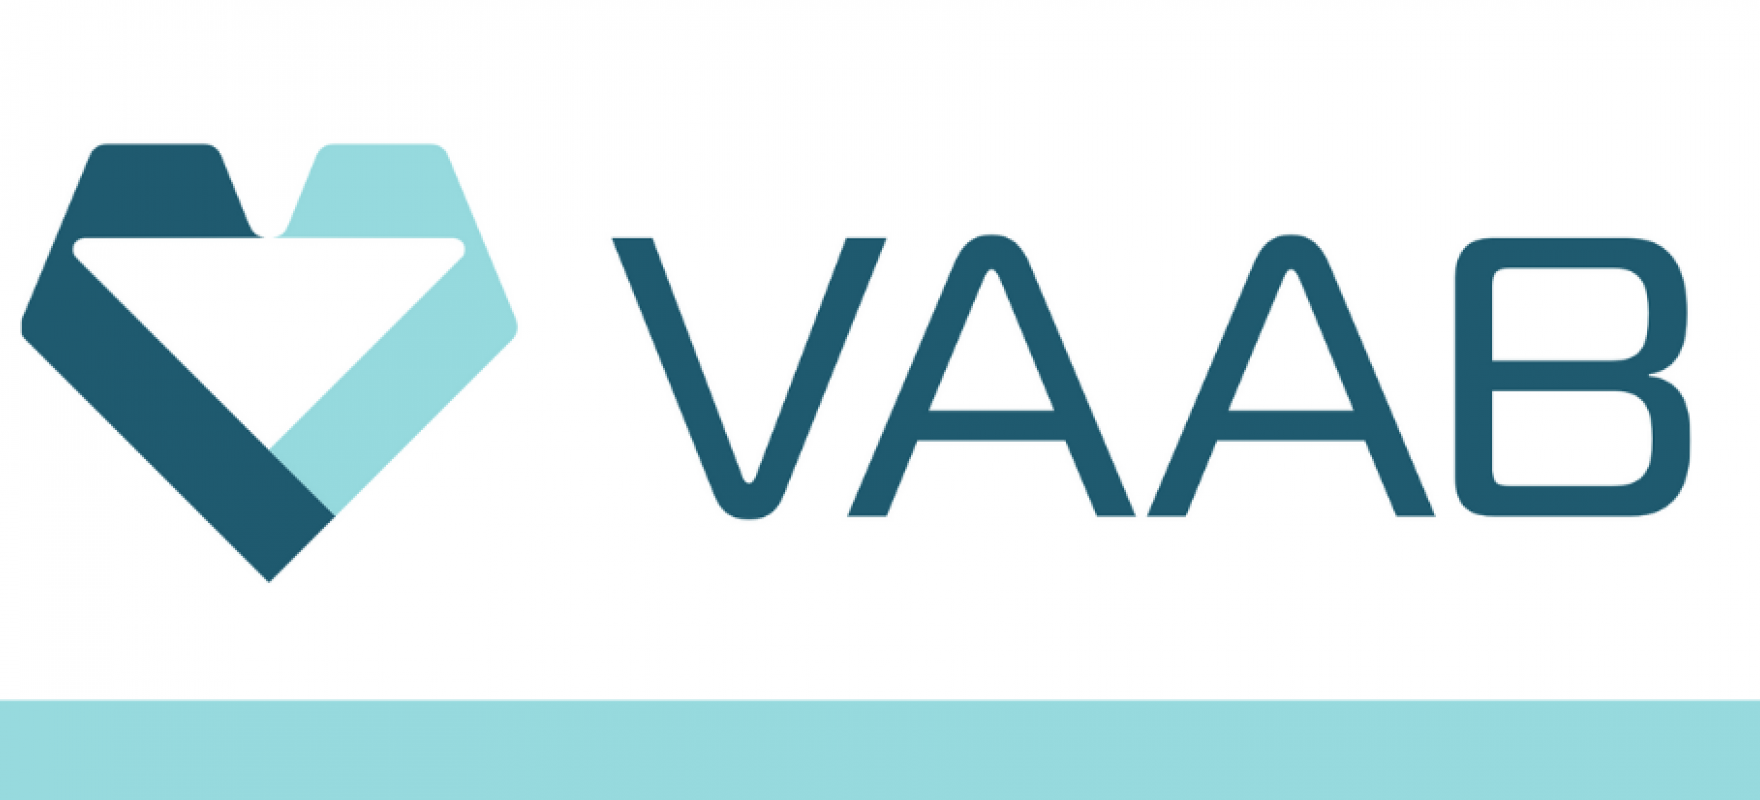 Vaabi logo